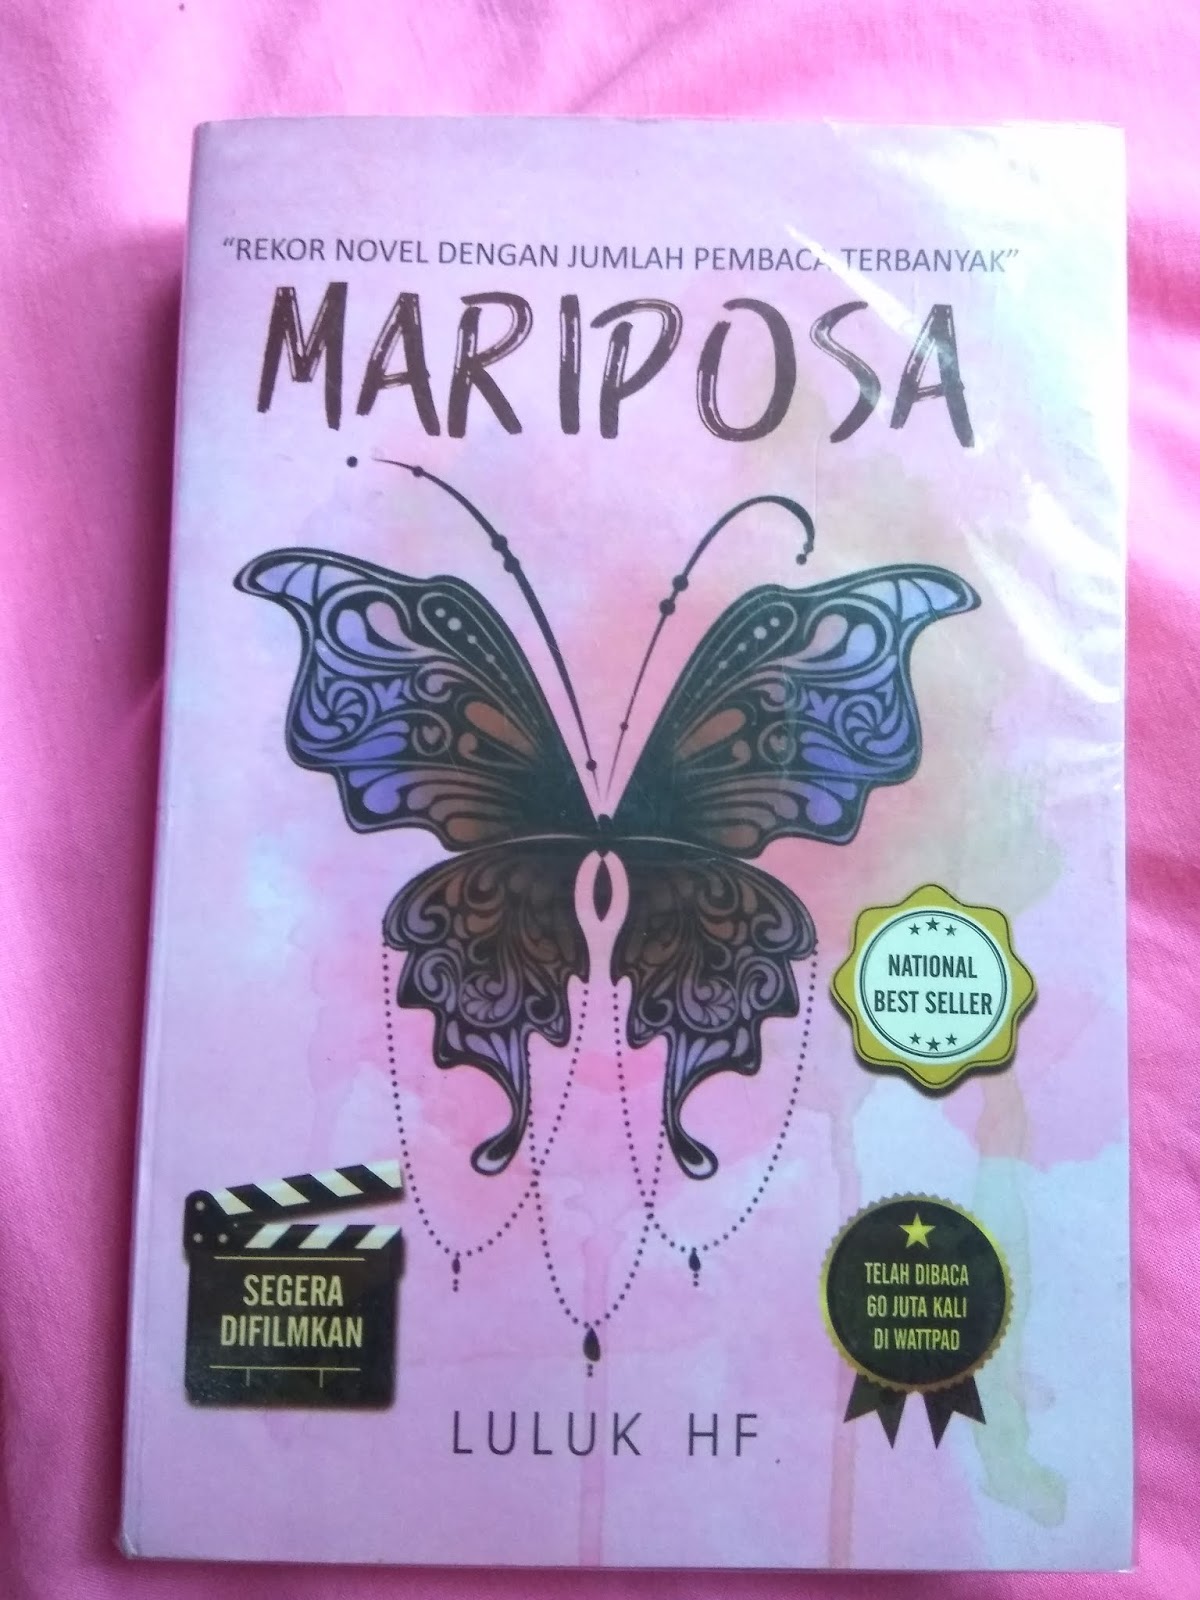 Rose Amanda Resensi Novel  Terbaru  Mariposa karya Luluk HF